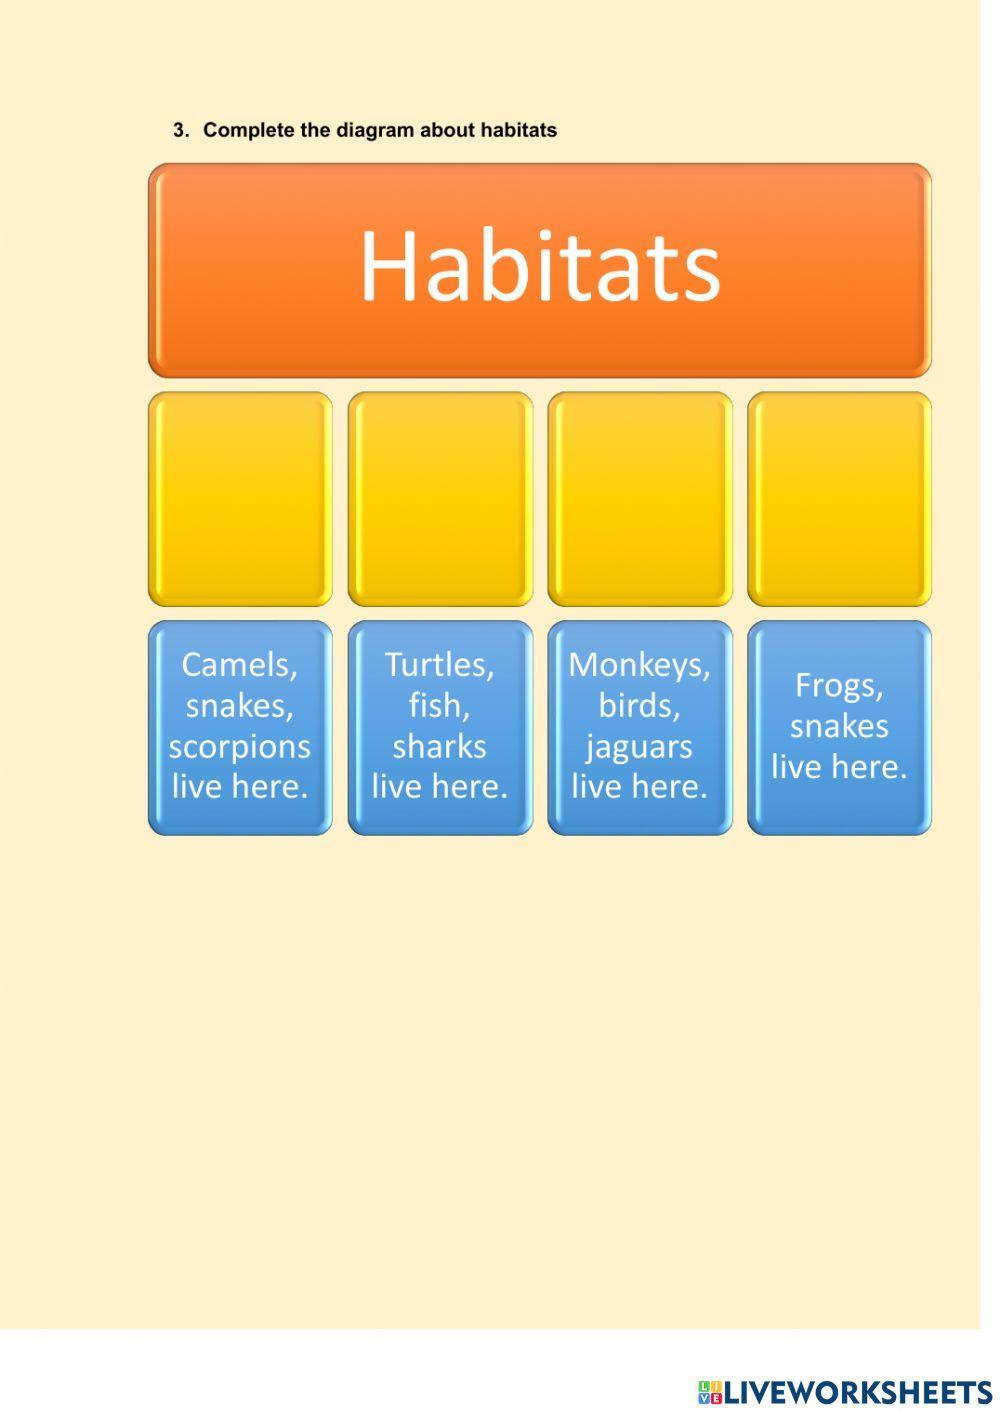 Habitats of the world